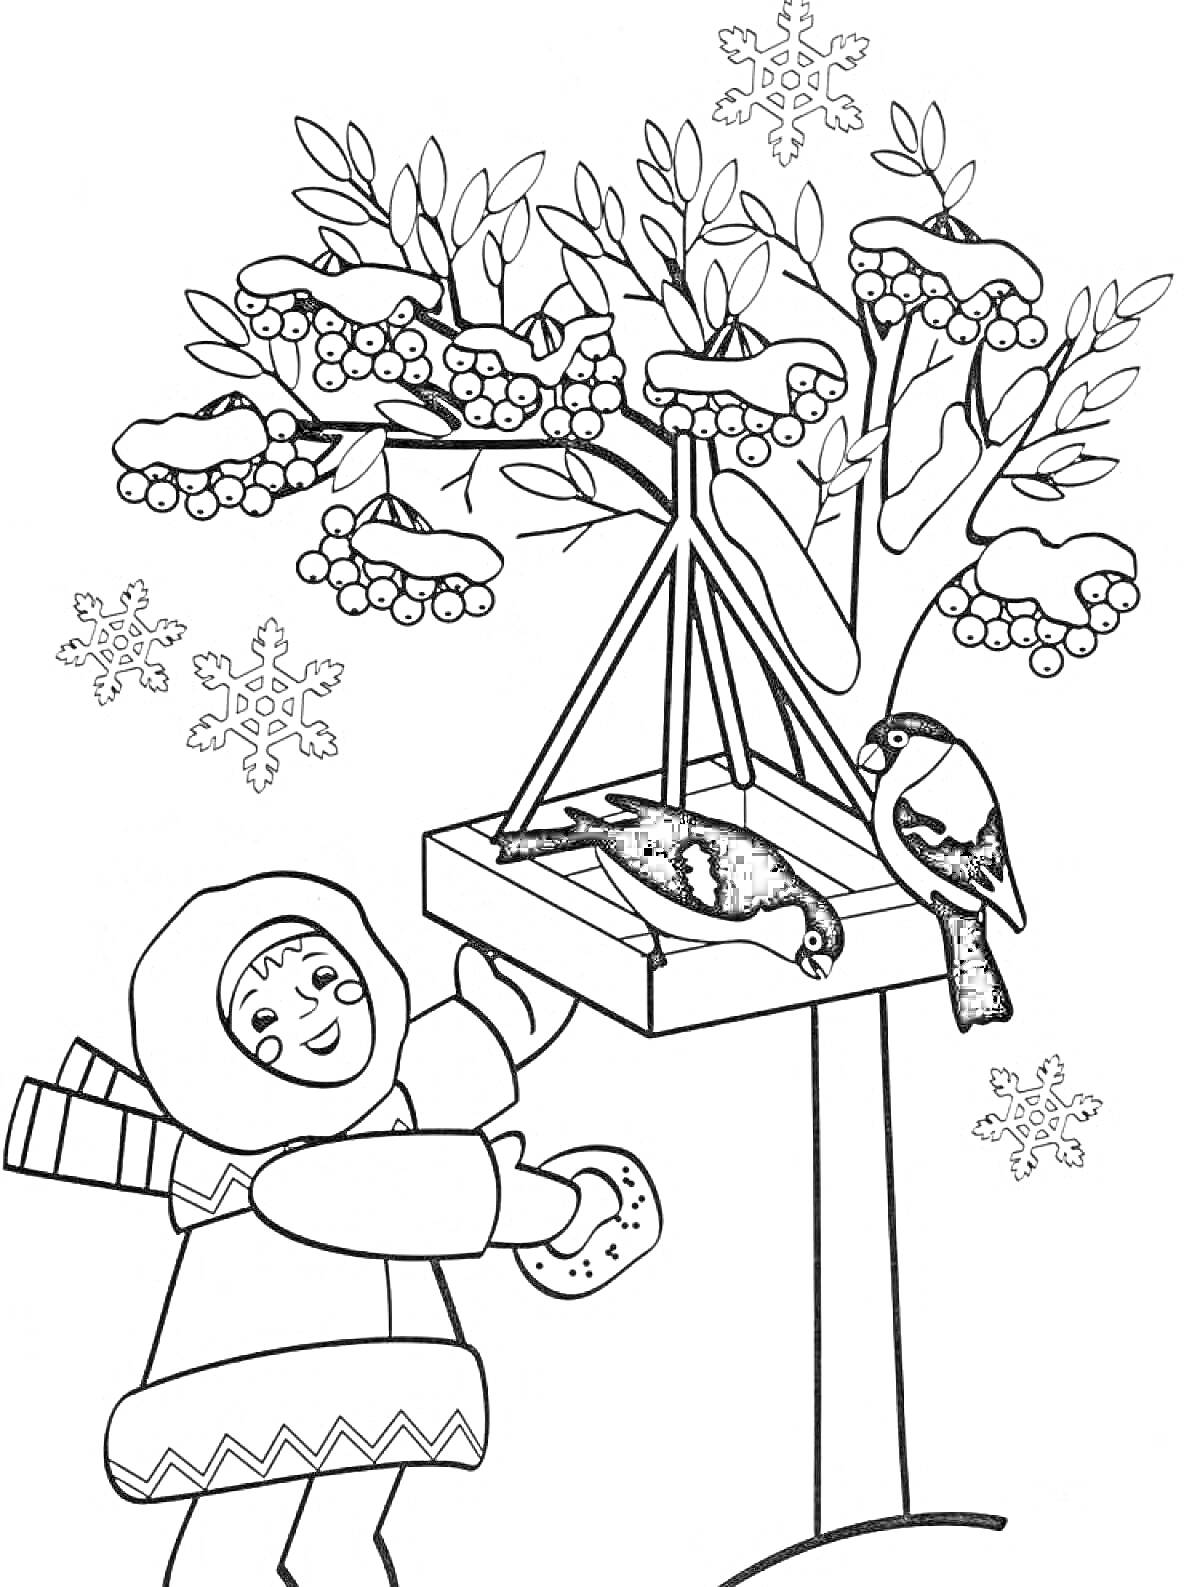 Раскраска ребенок кормит птиц возле кормушки на дереве зимой